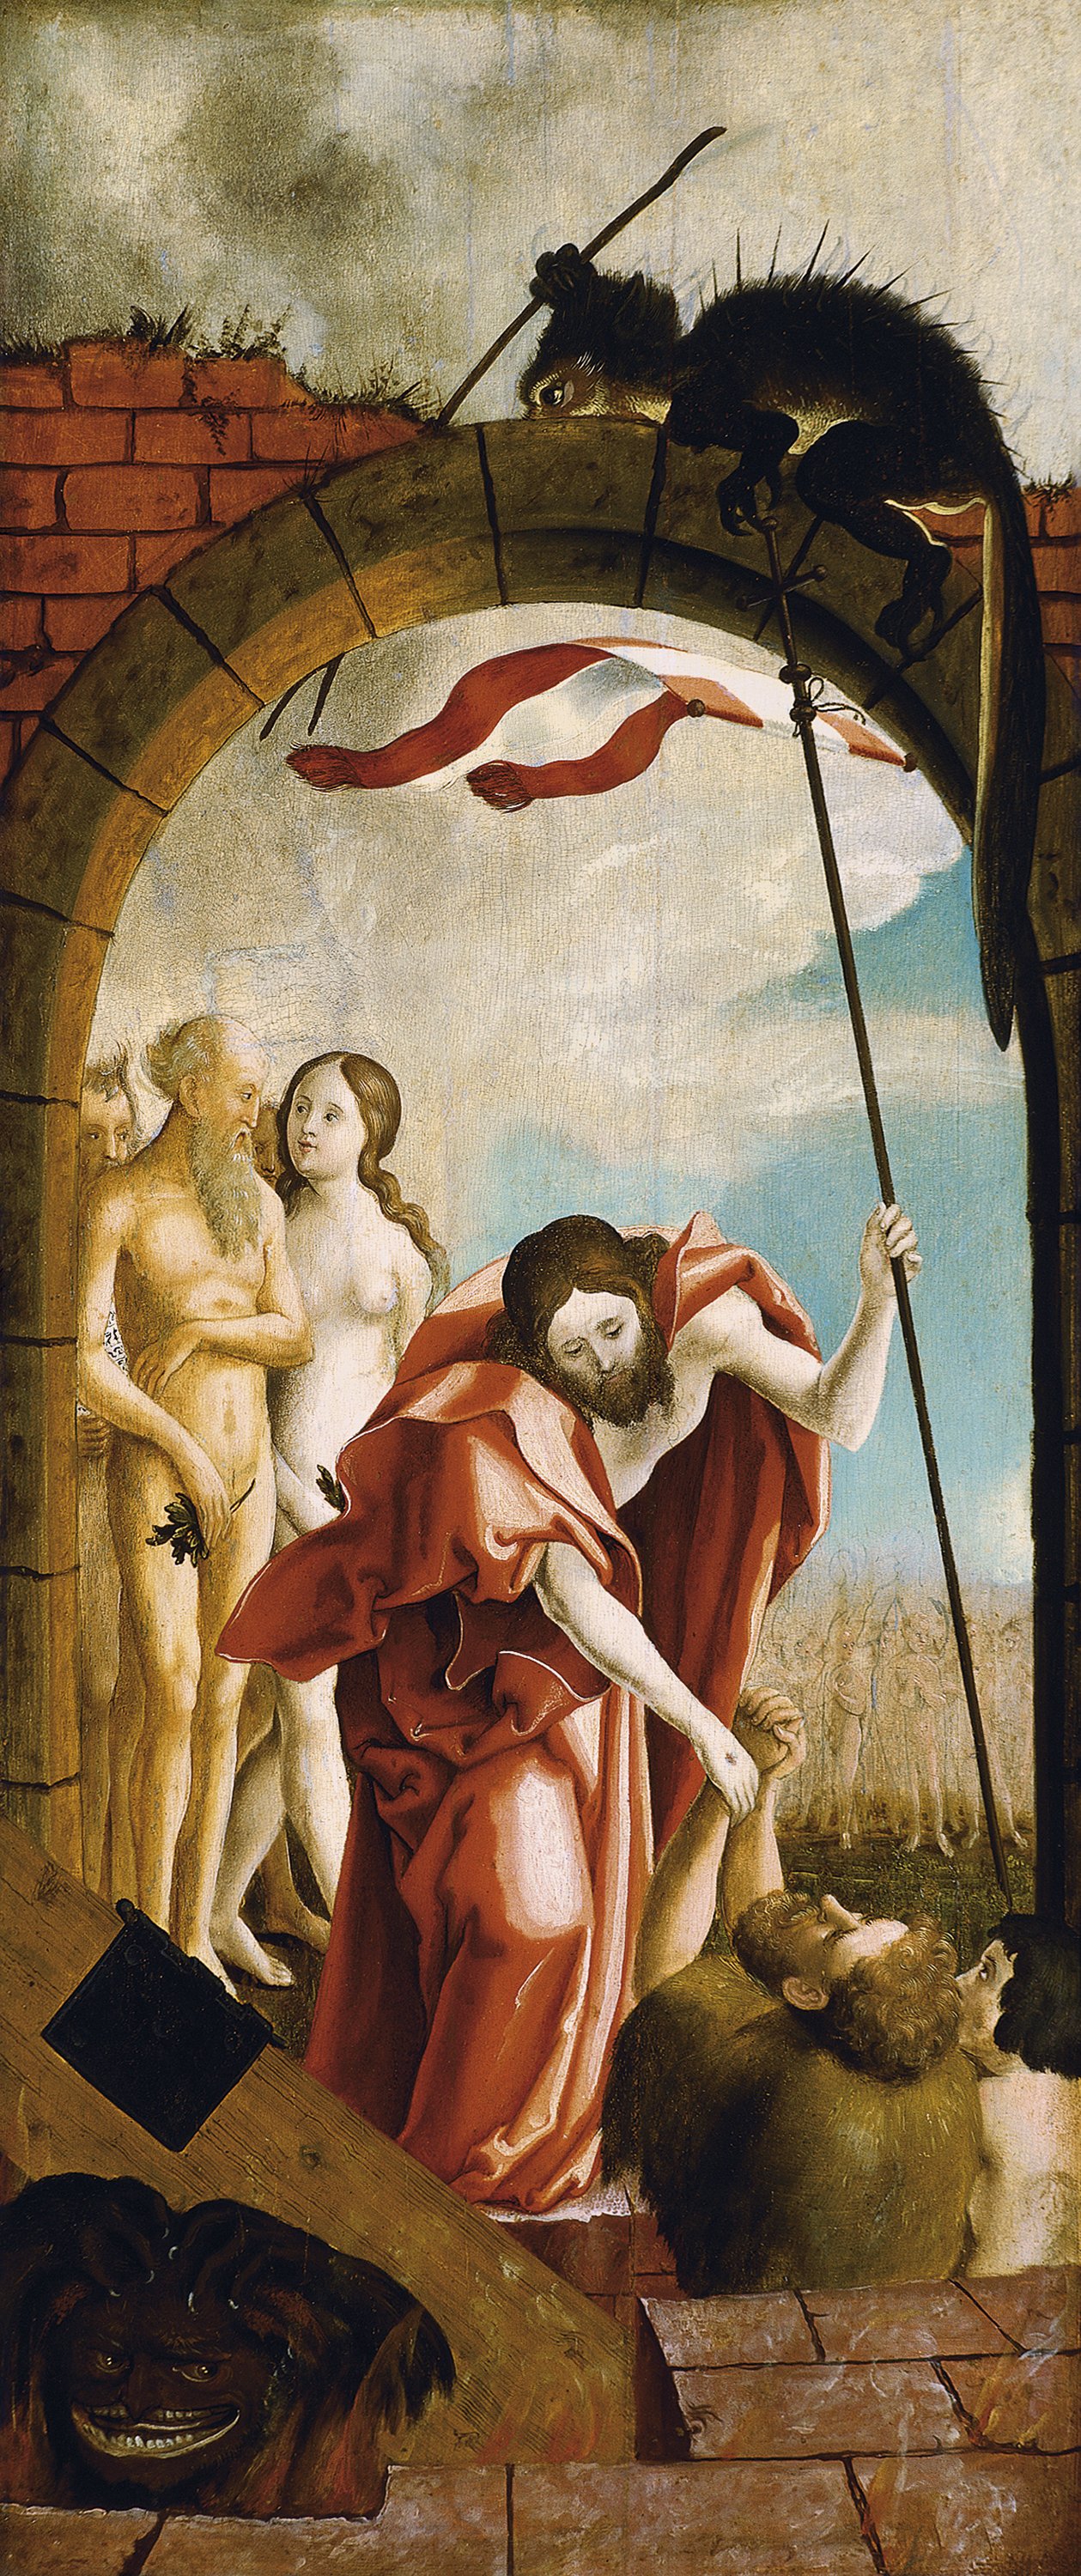 Christ in Limbo. Cristo en el Limbo, c. 1520